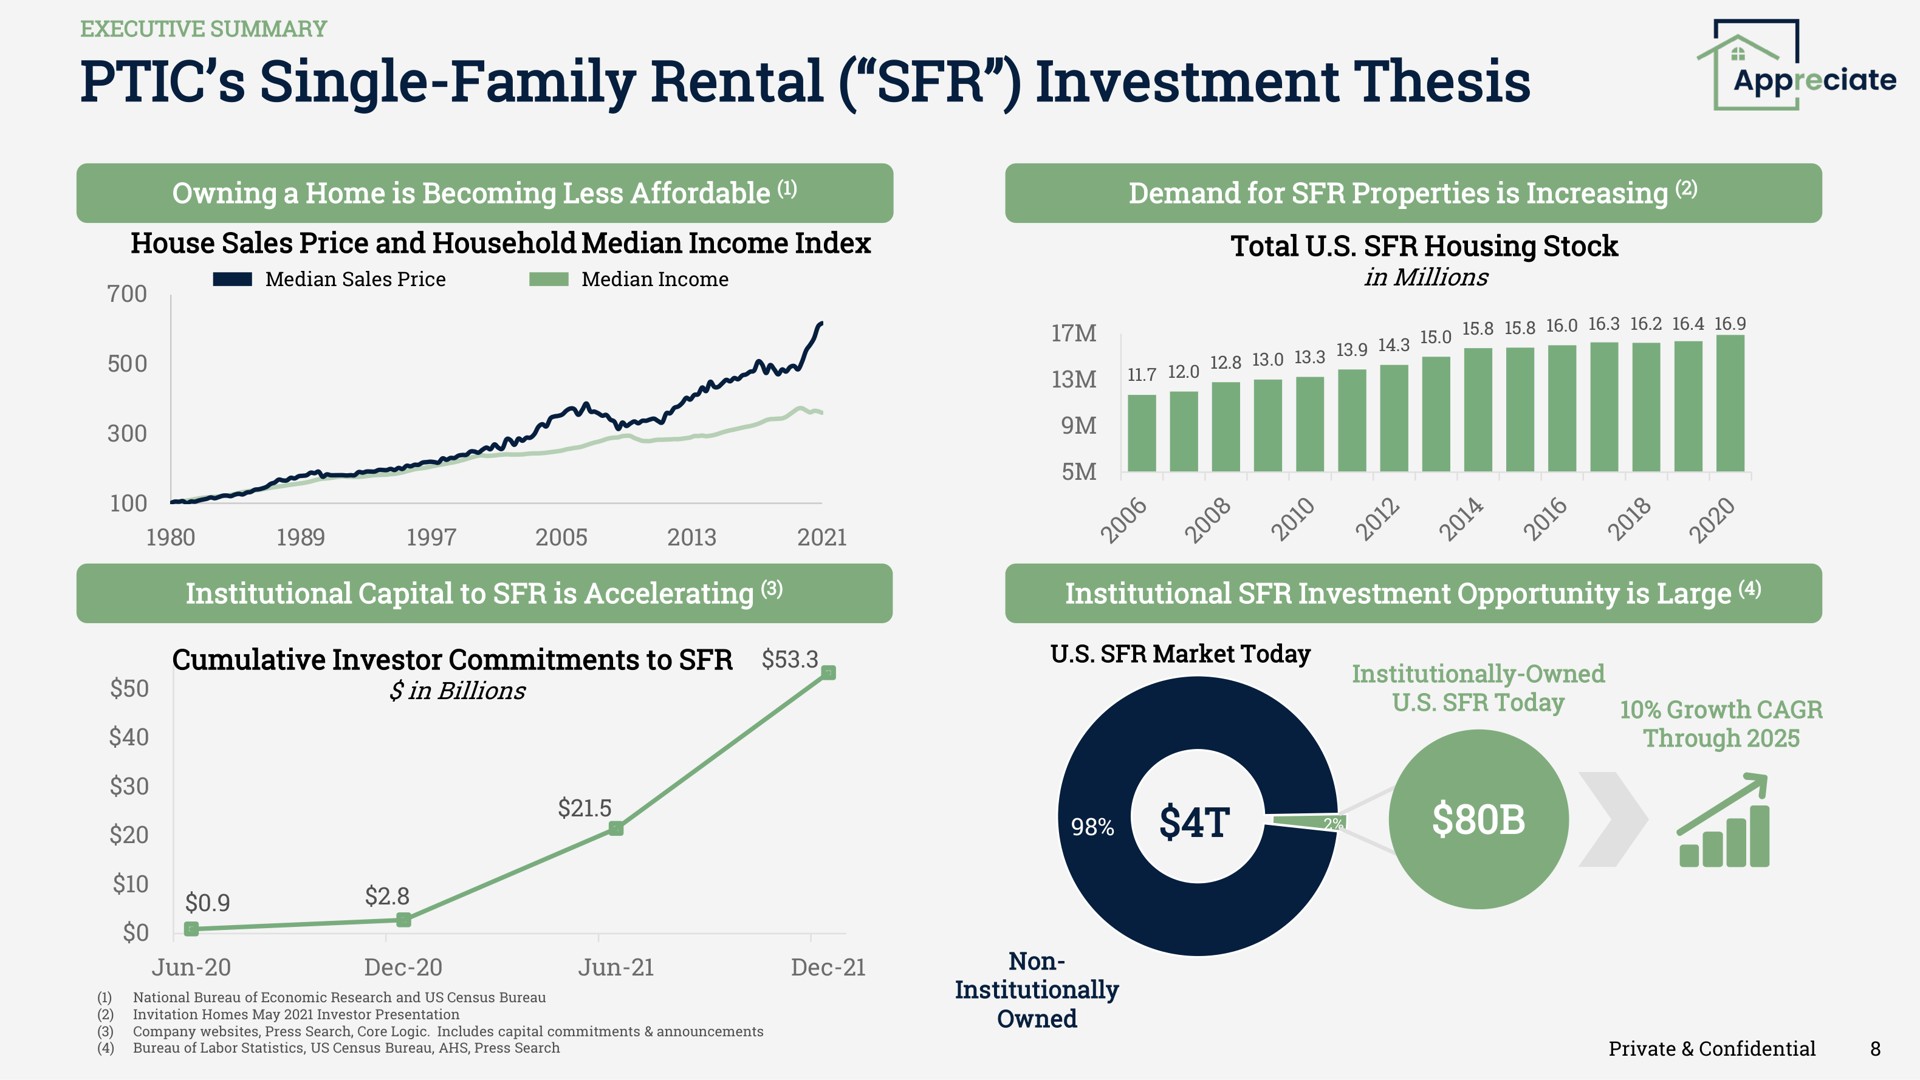 single family rental investment thesis appreciate | Appreciate